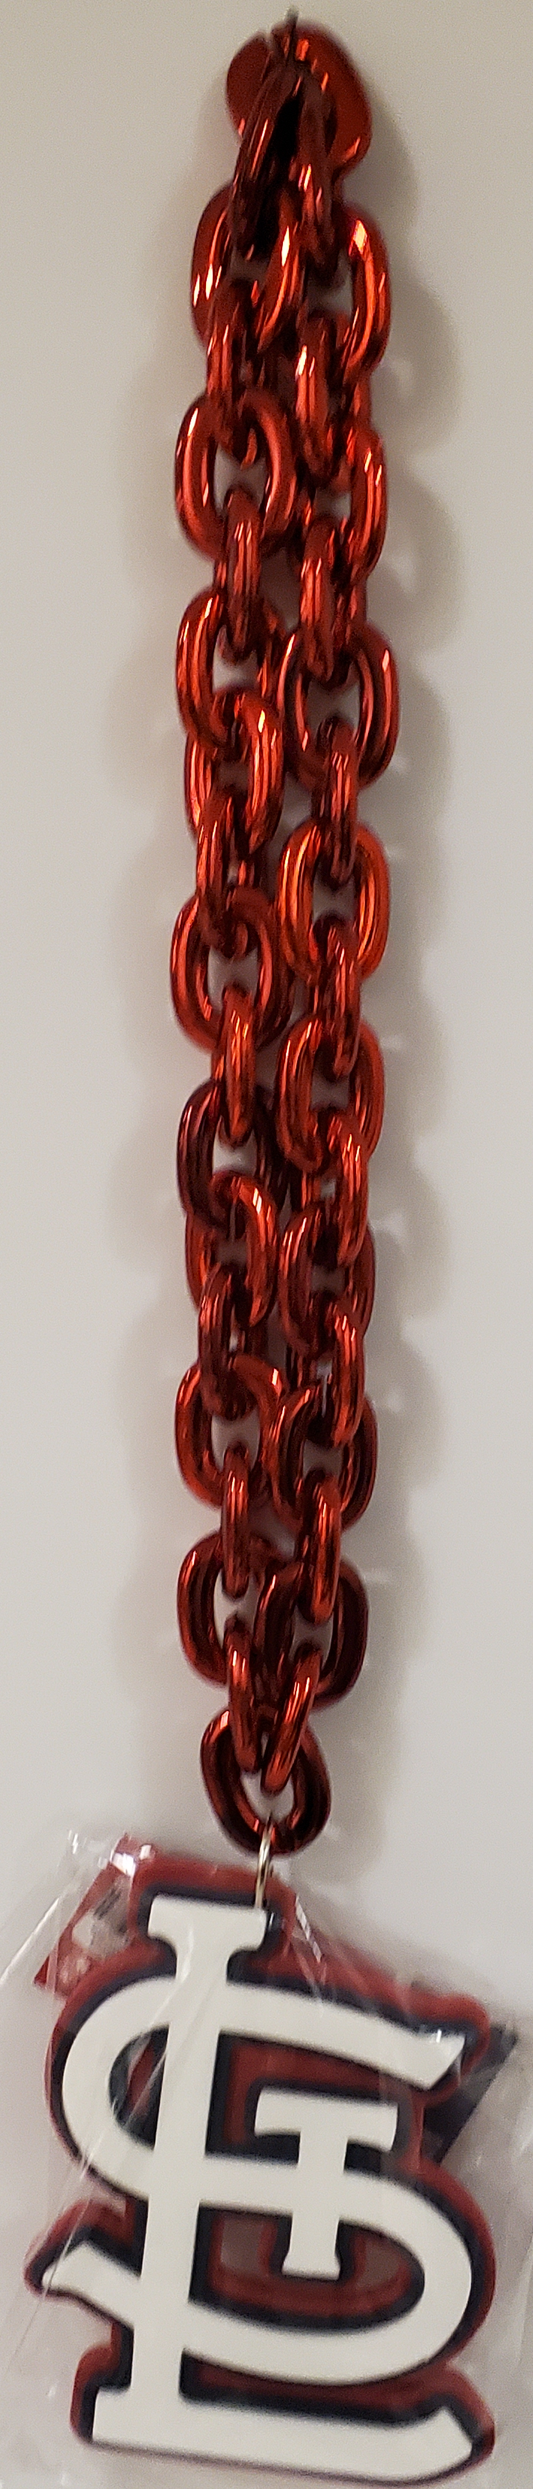 Fan Chains 10 Inch 3D Foam Necklace – Sports Images & More LLC